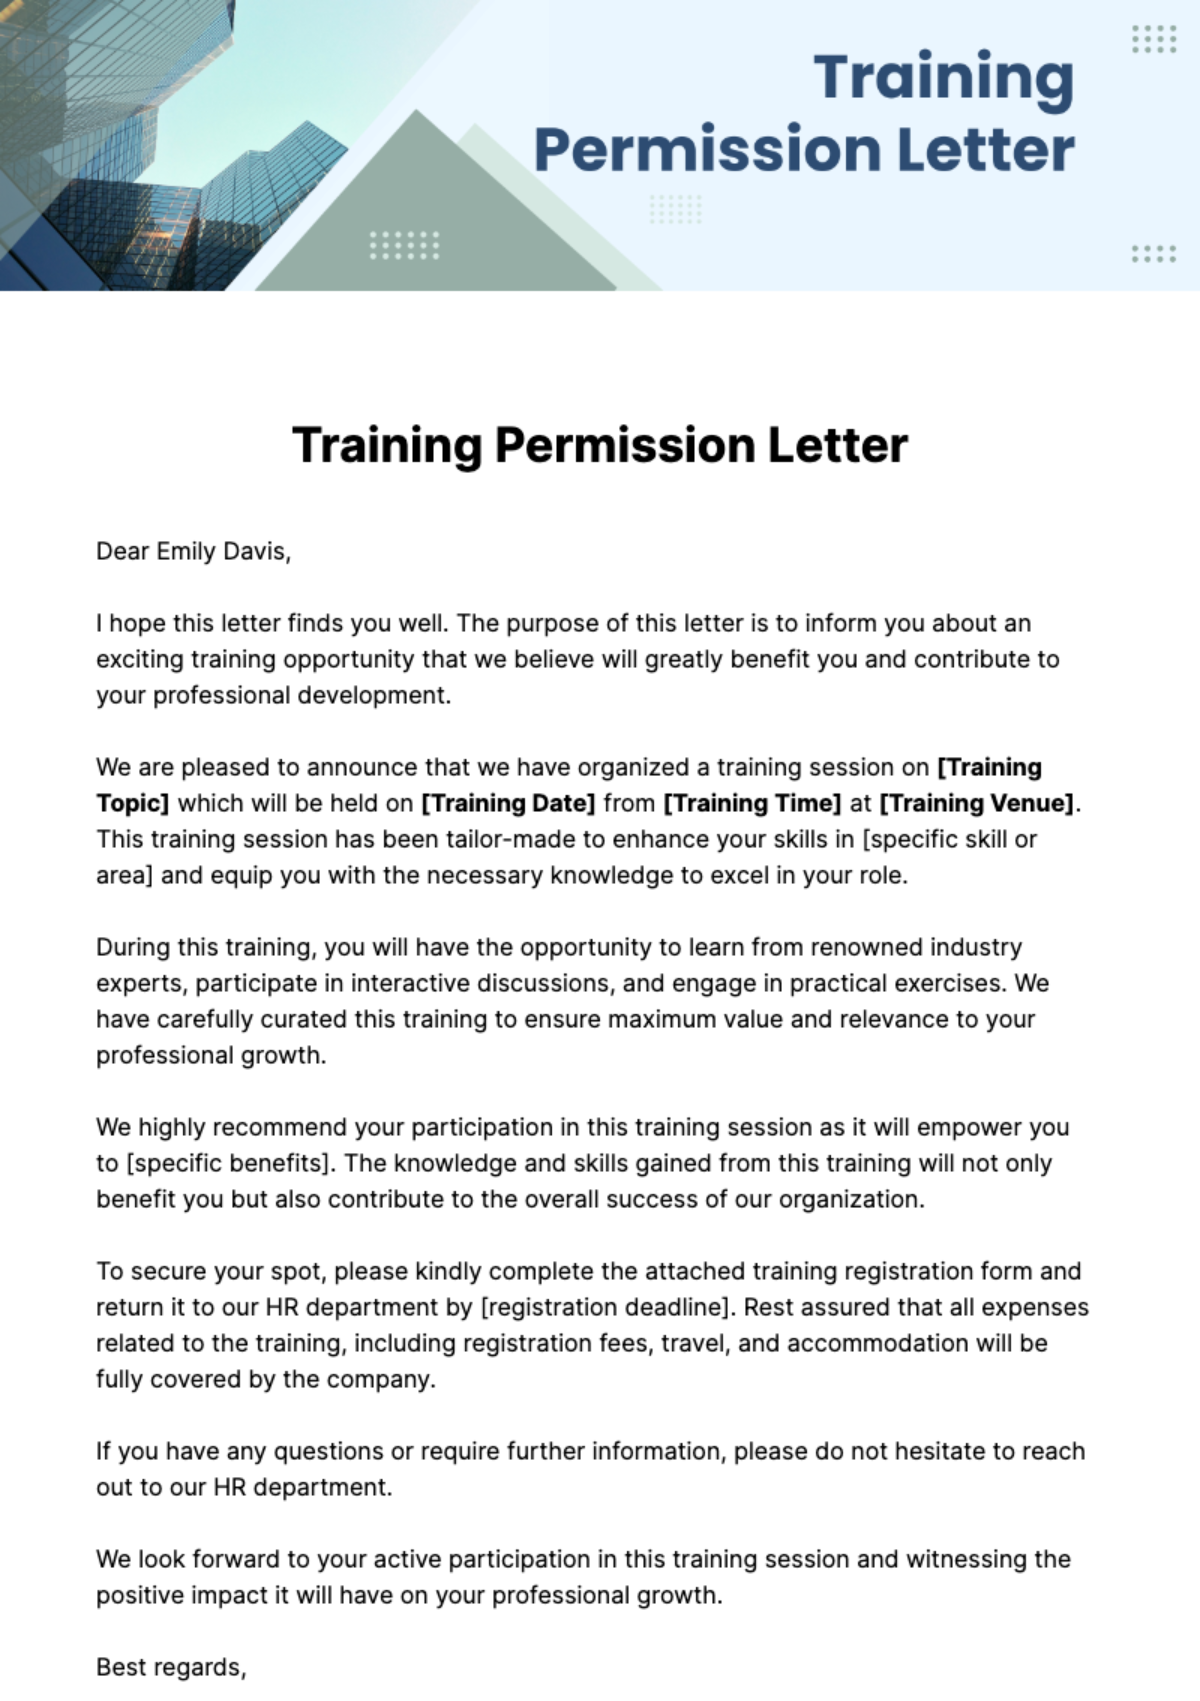 Training Permission Letter Template